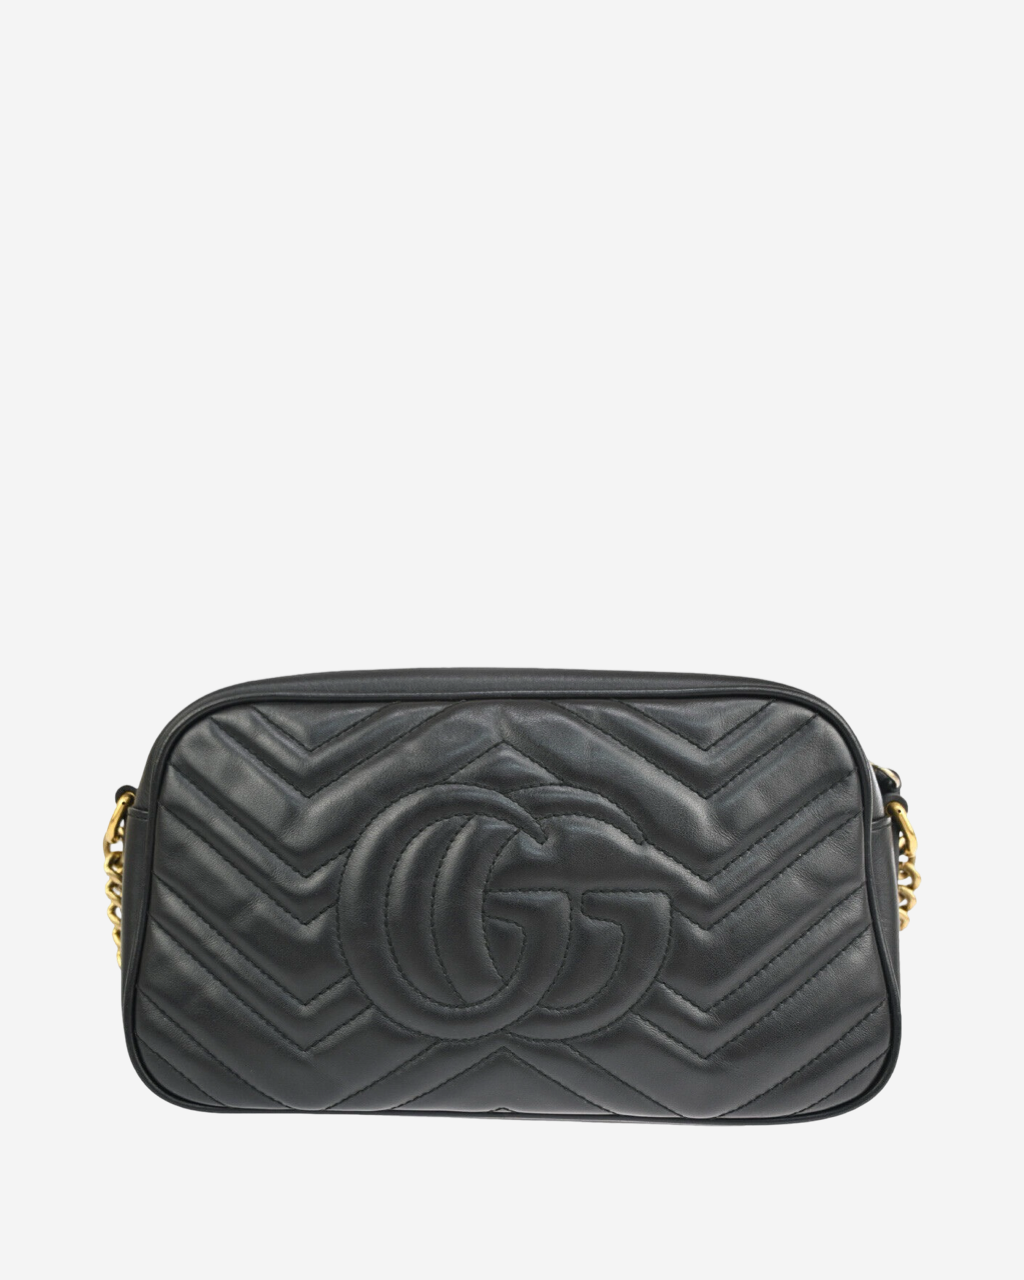 Gucci GG Marmont bag